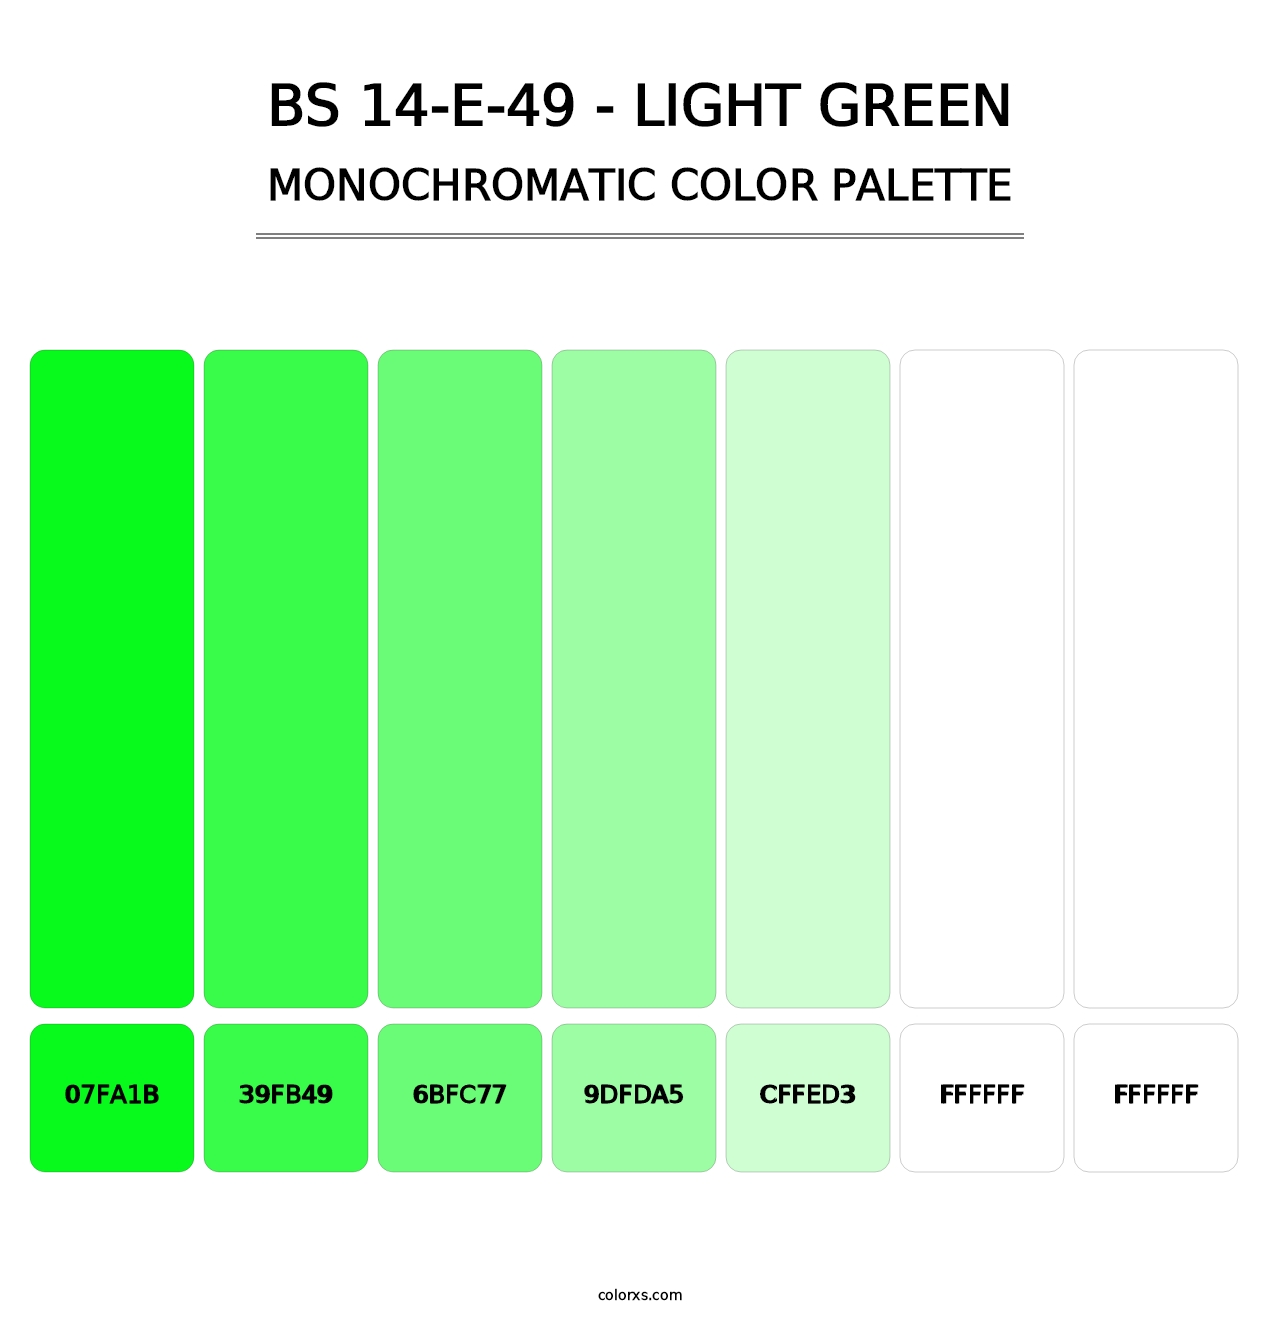 BS 14-E-49 - Light Green - Monochromatic Color Palette